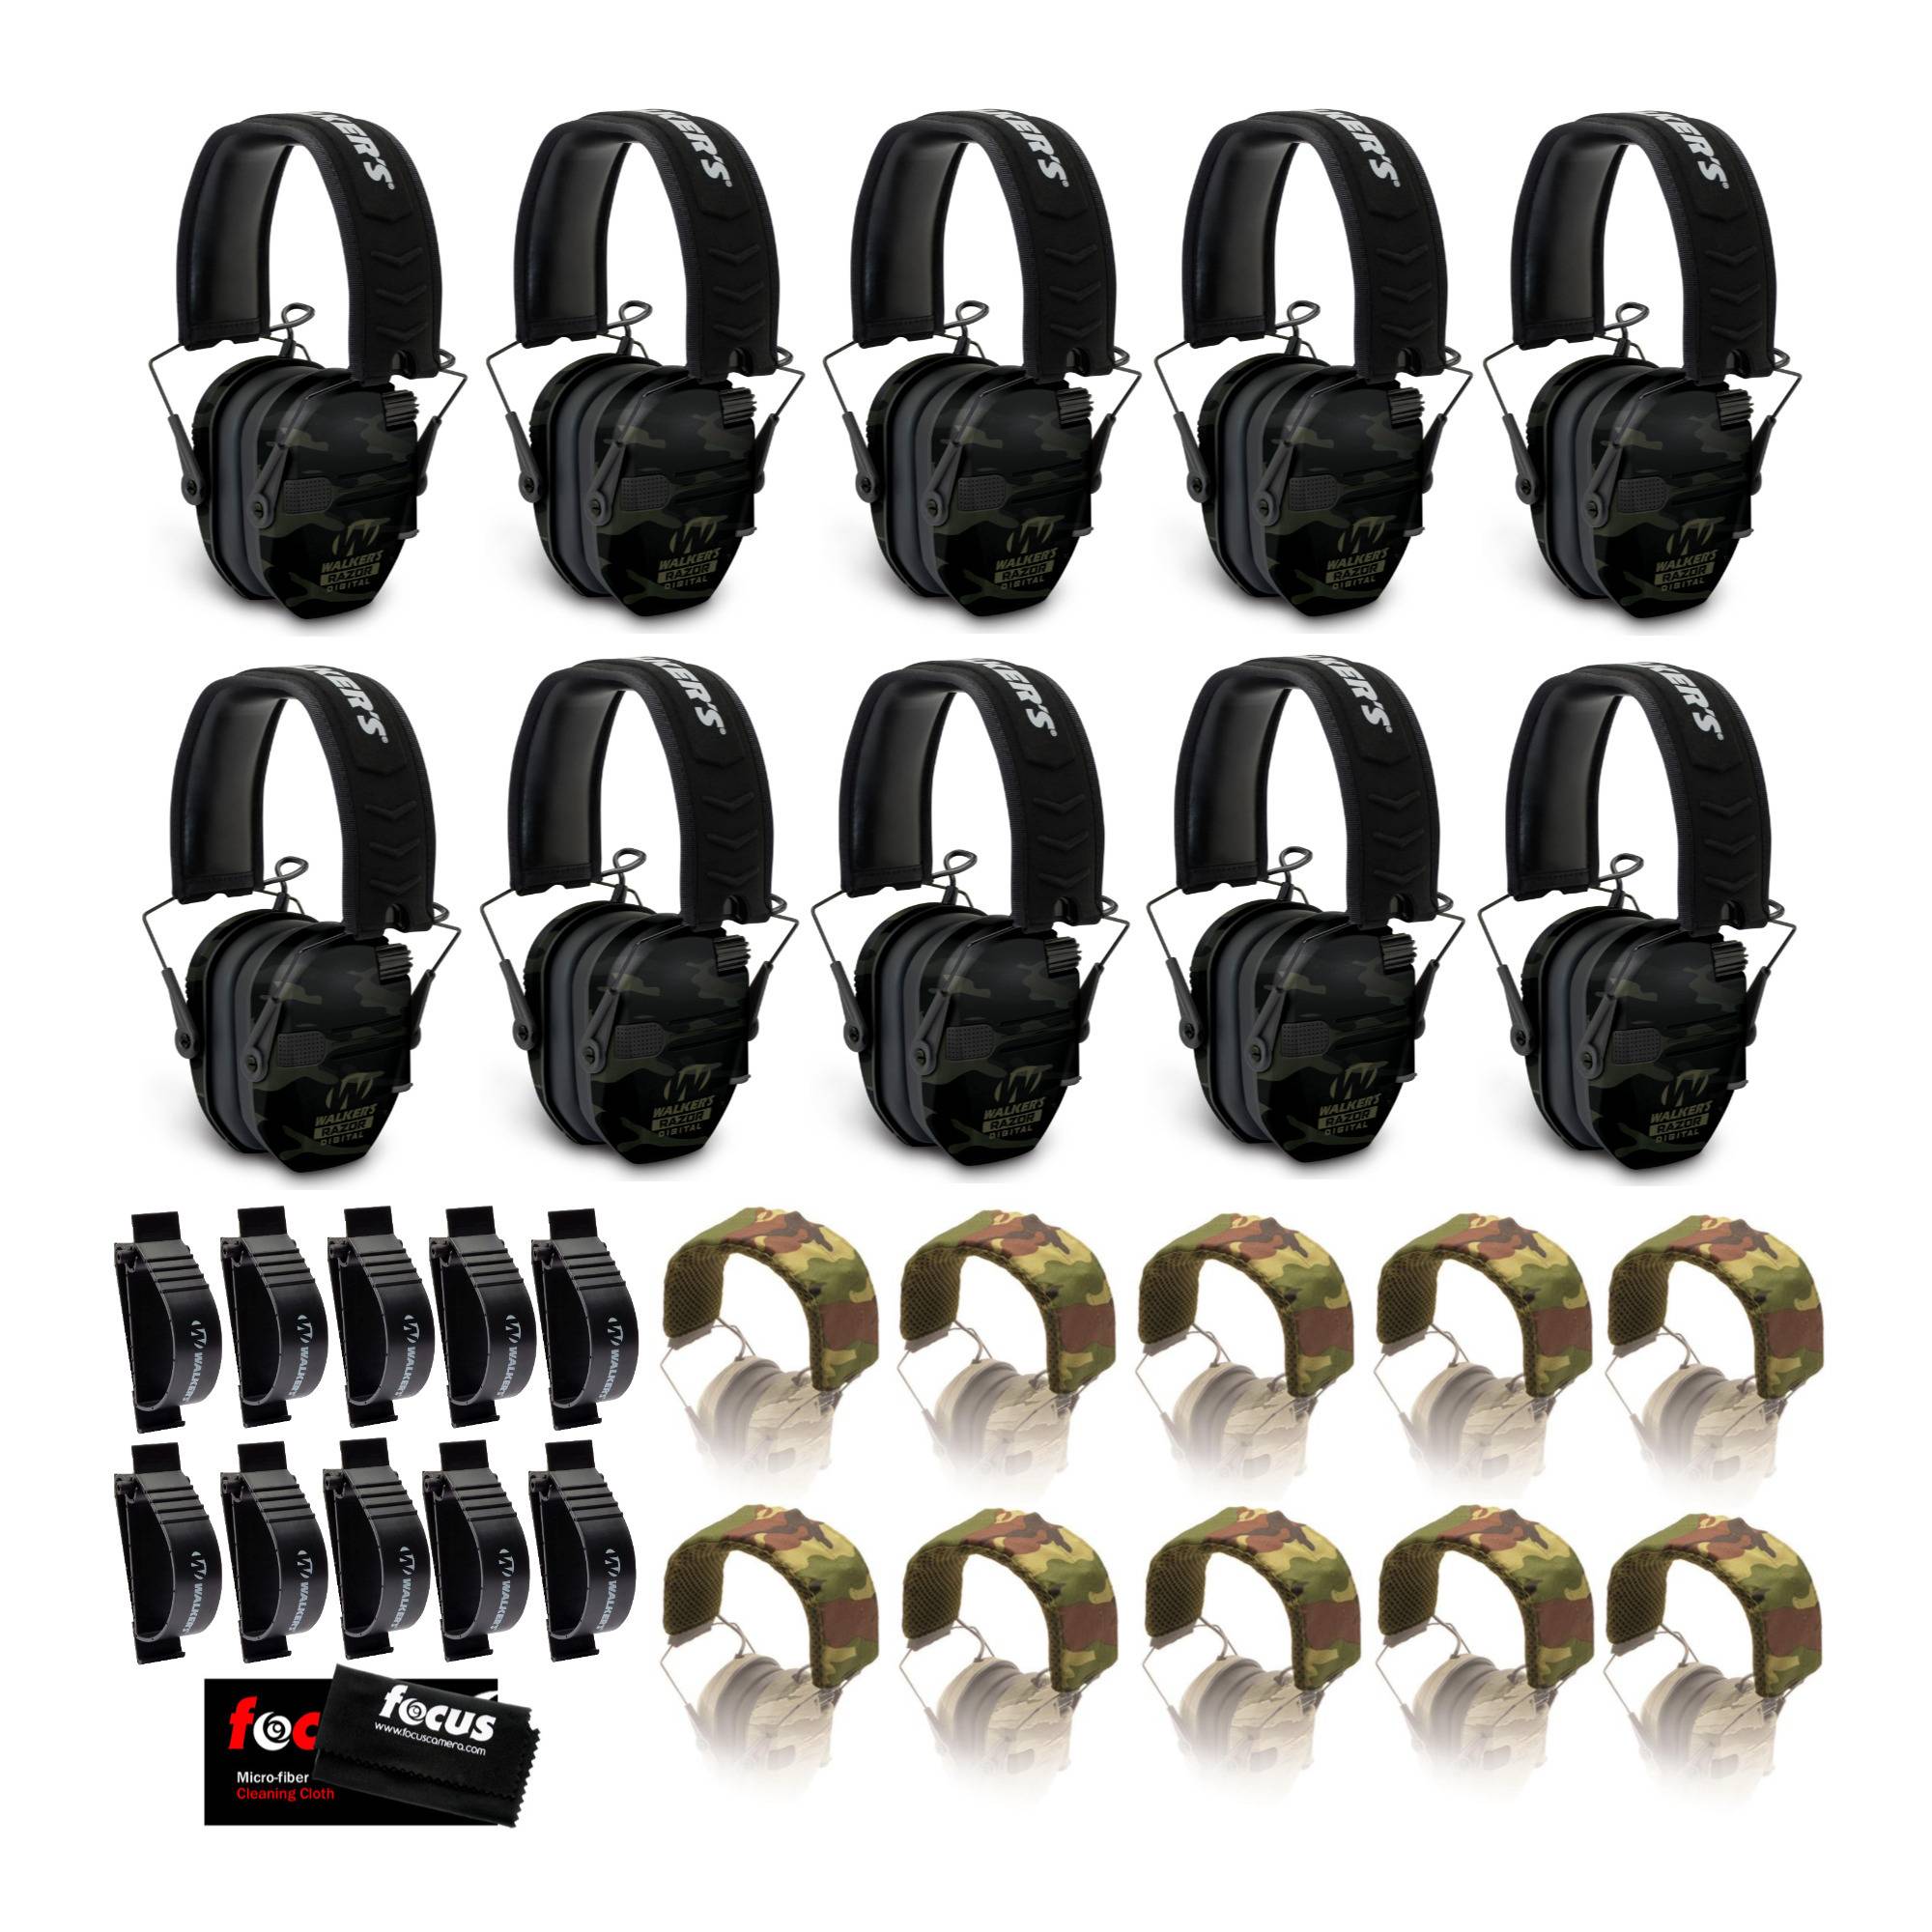 Walker's Razor Digital Ear Muffs (Multi Camo) Essentials Bundle (10-Pack)